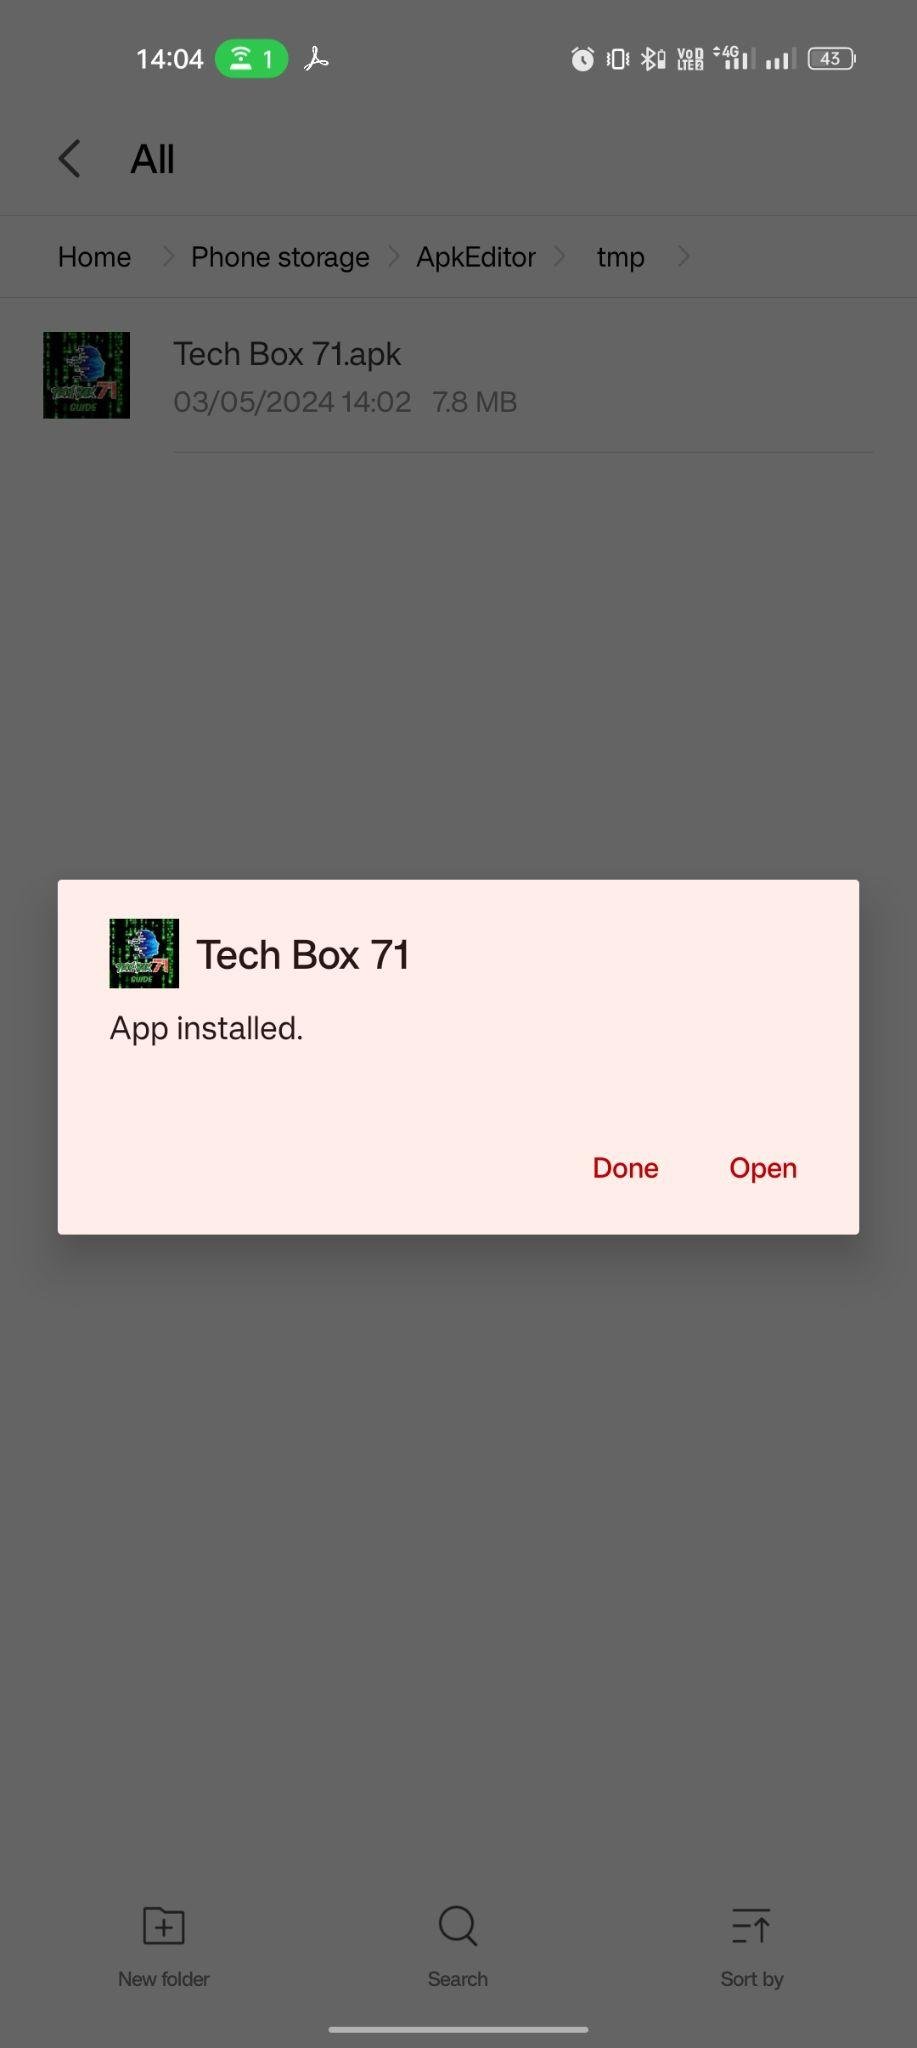 Tech Box 71 apk installed